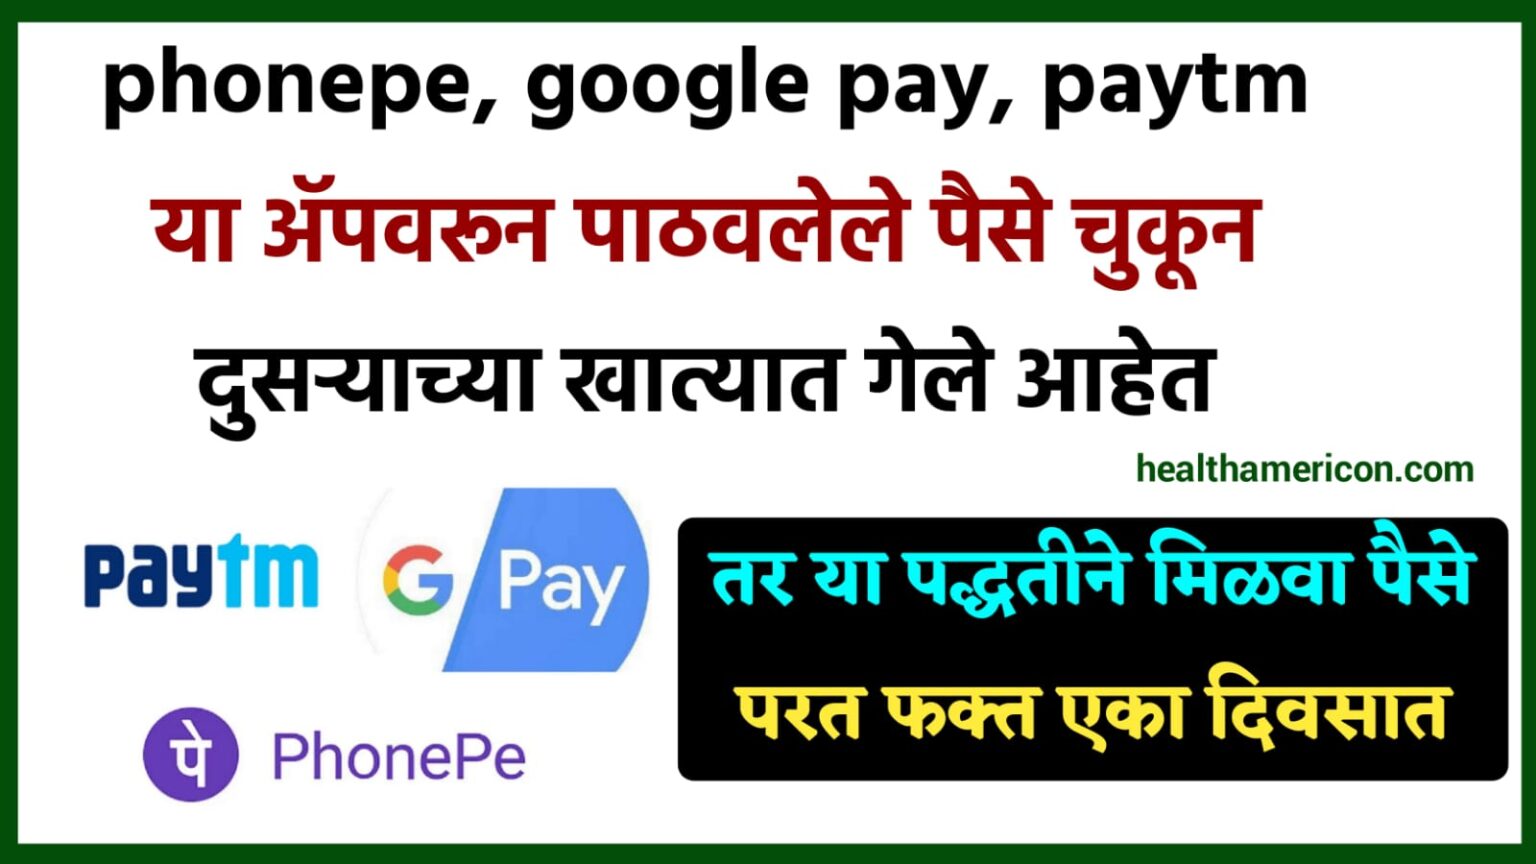 phonepe, google pay, paytm